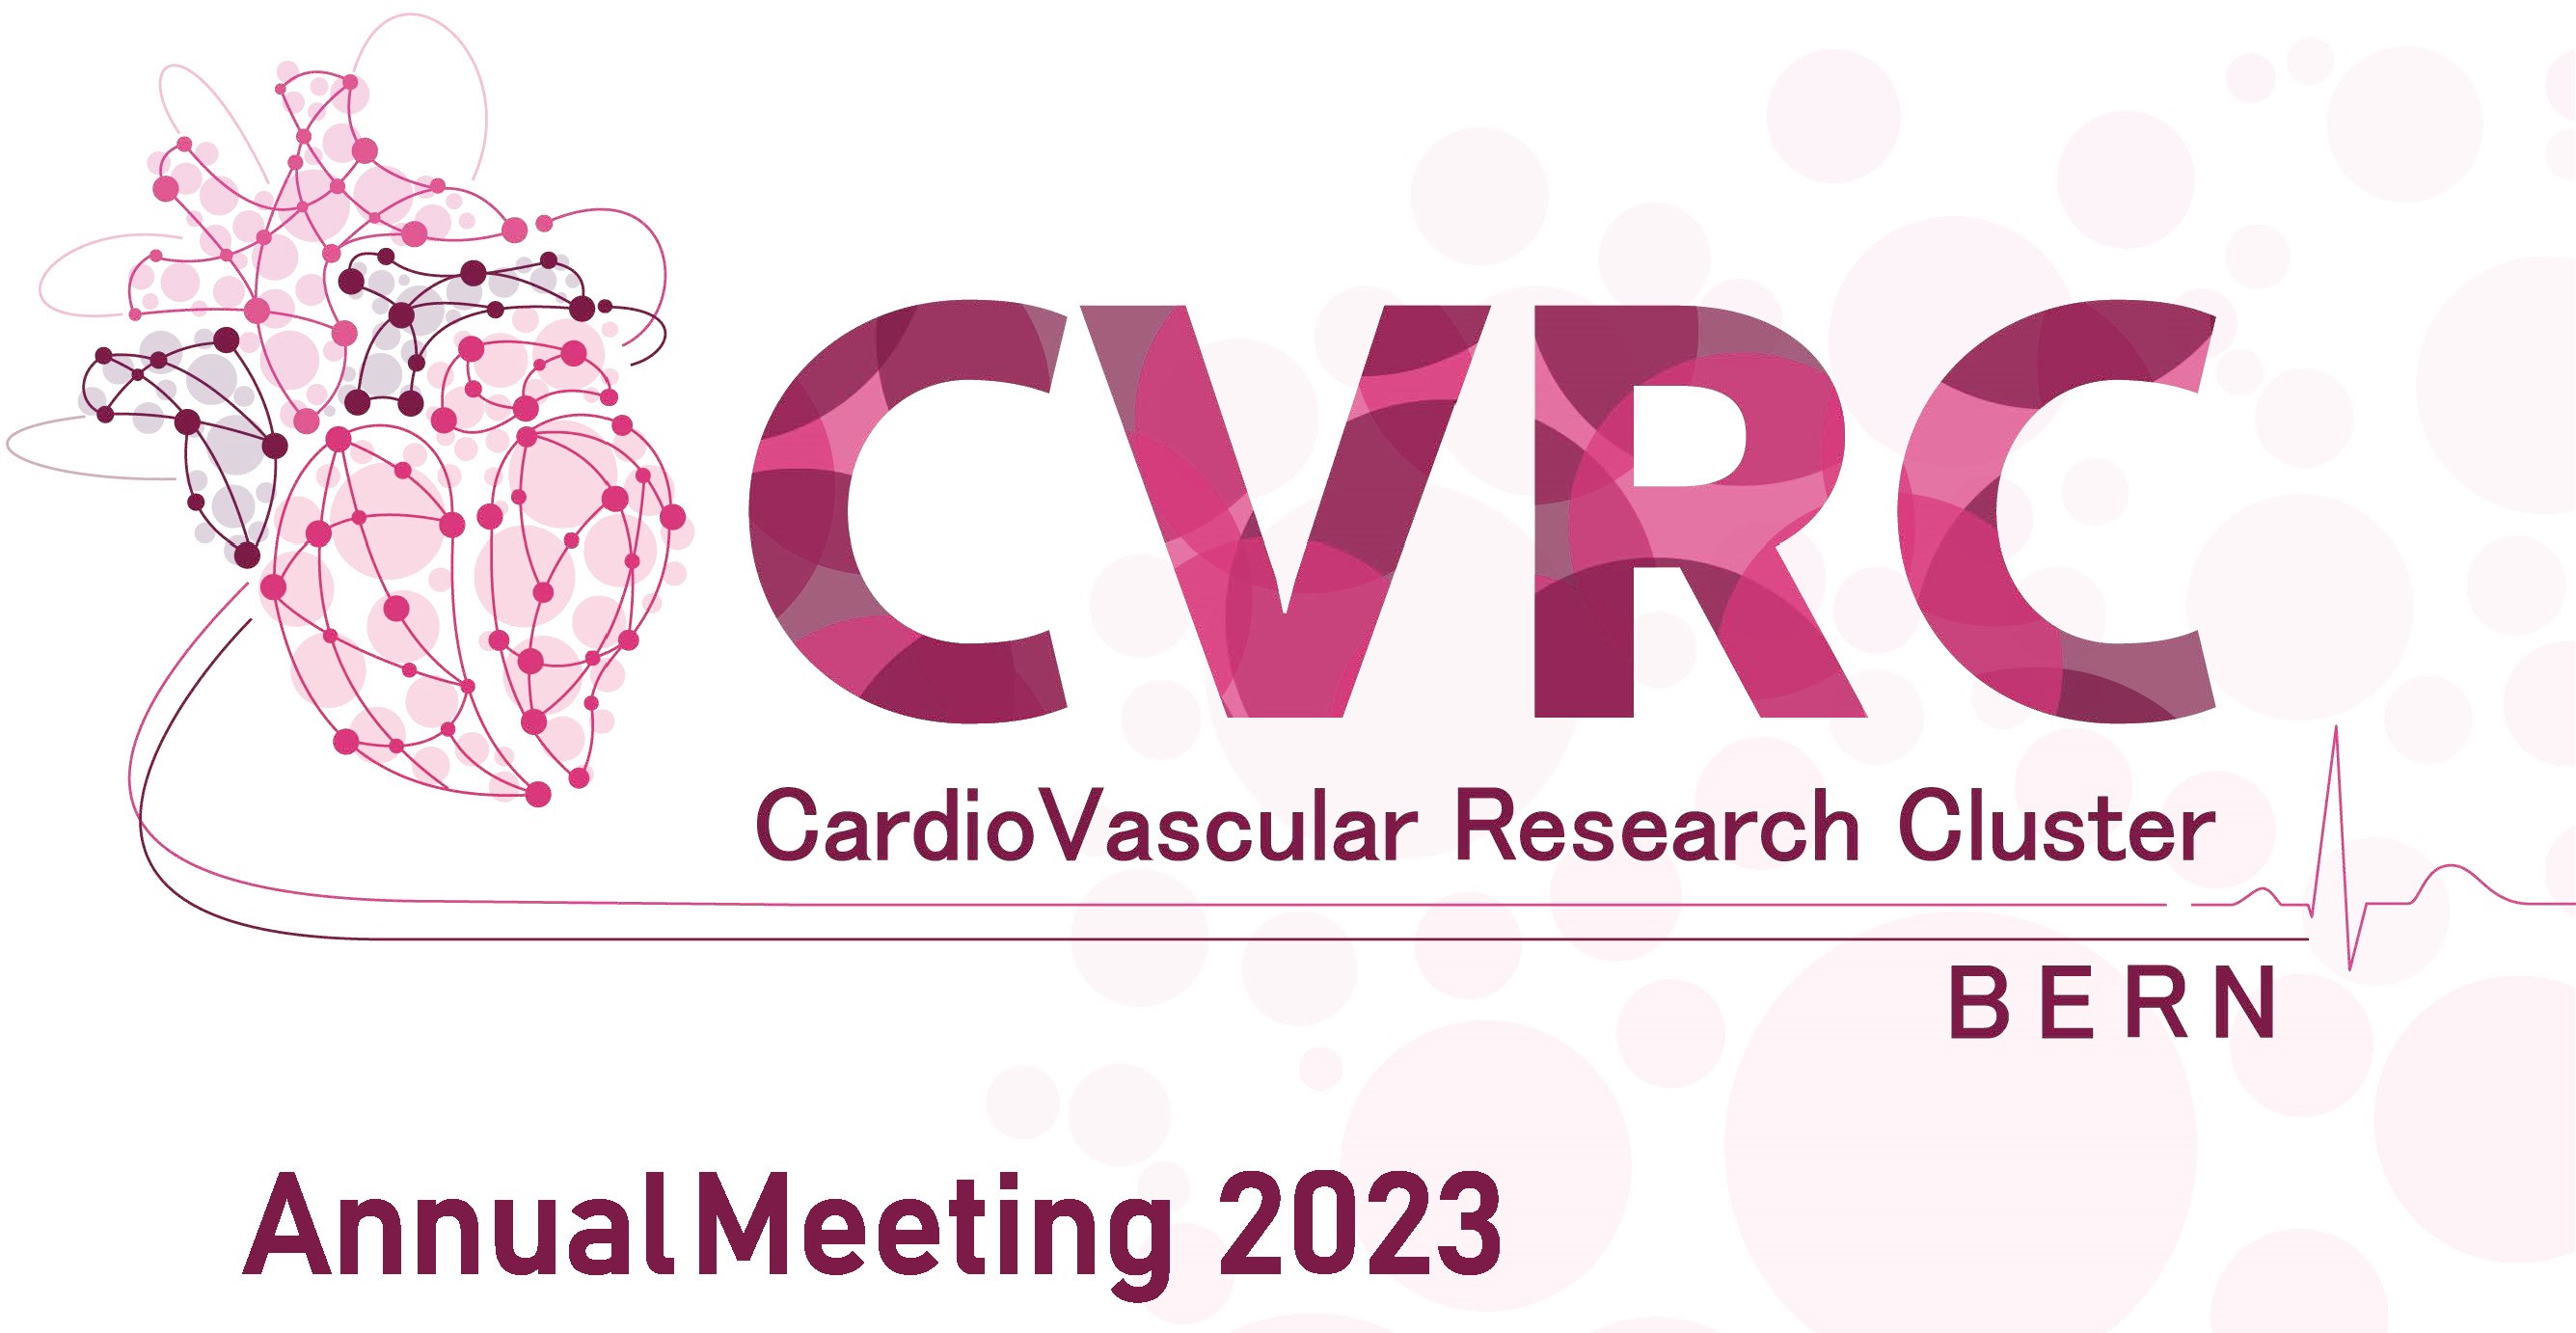 CVRC Annual Meeting logo